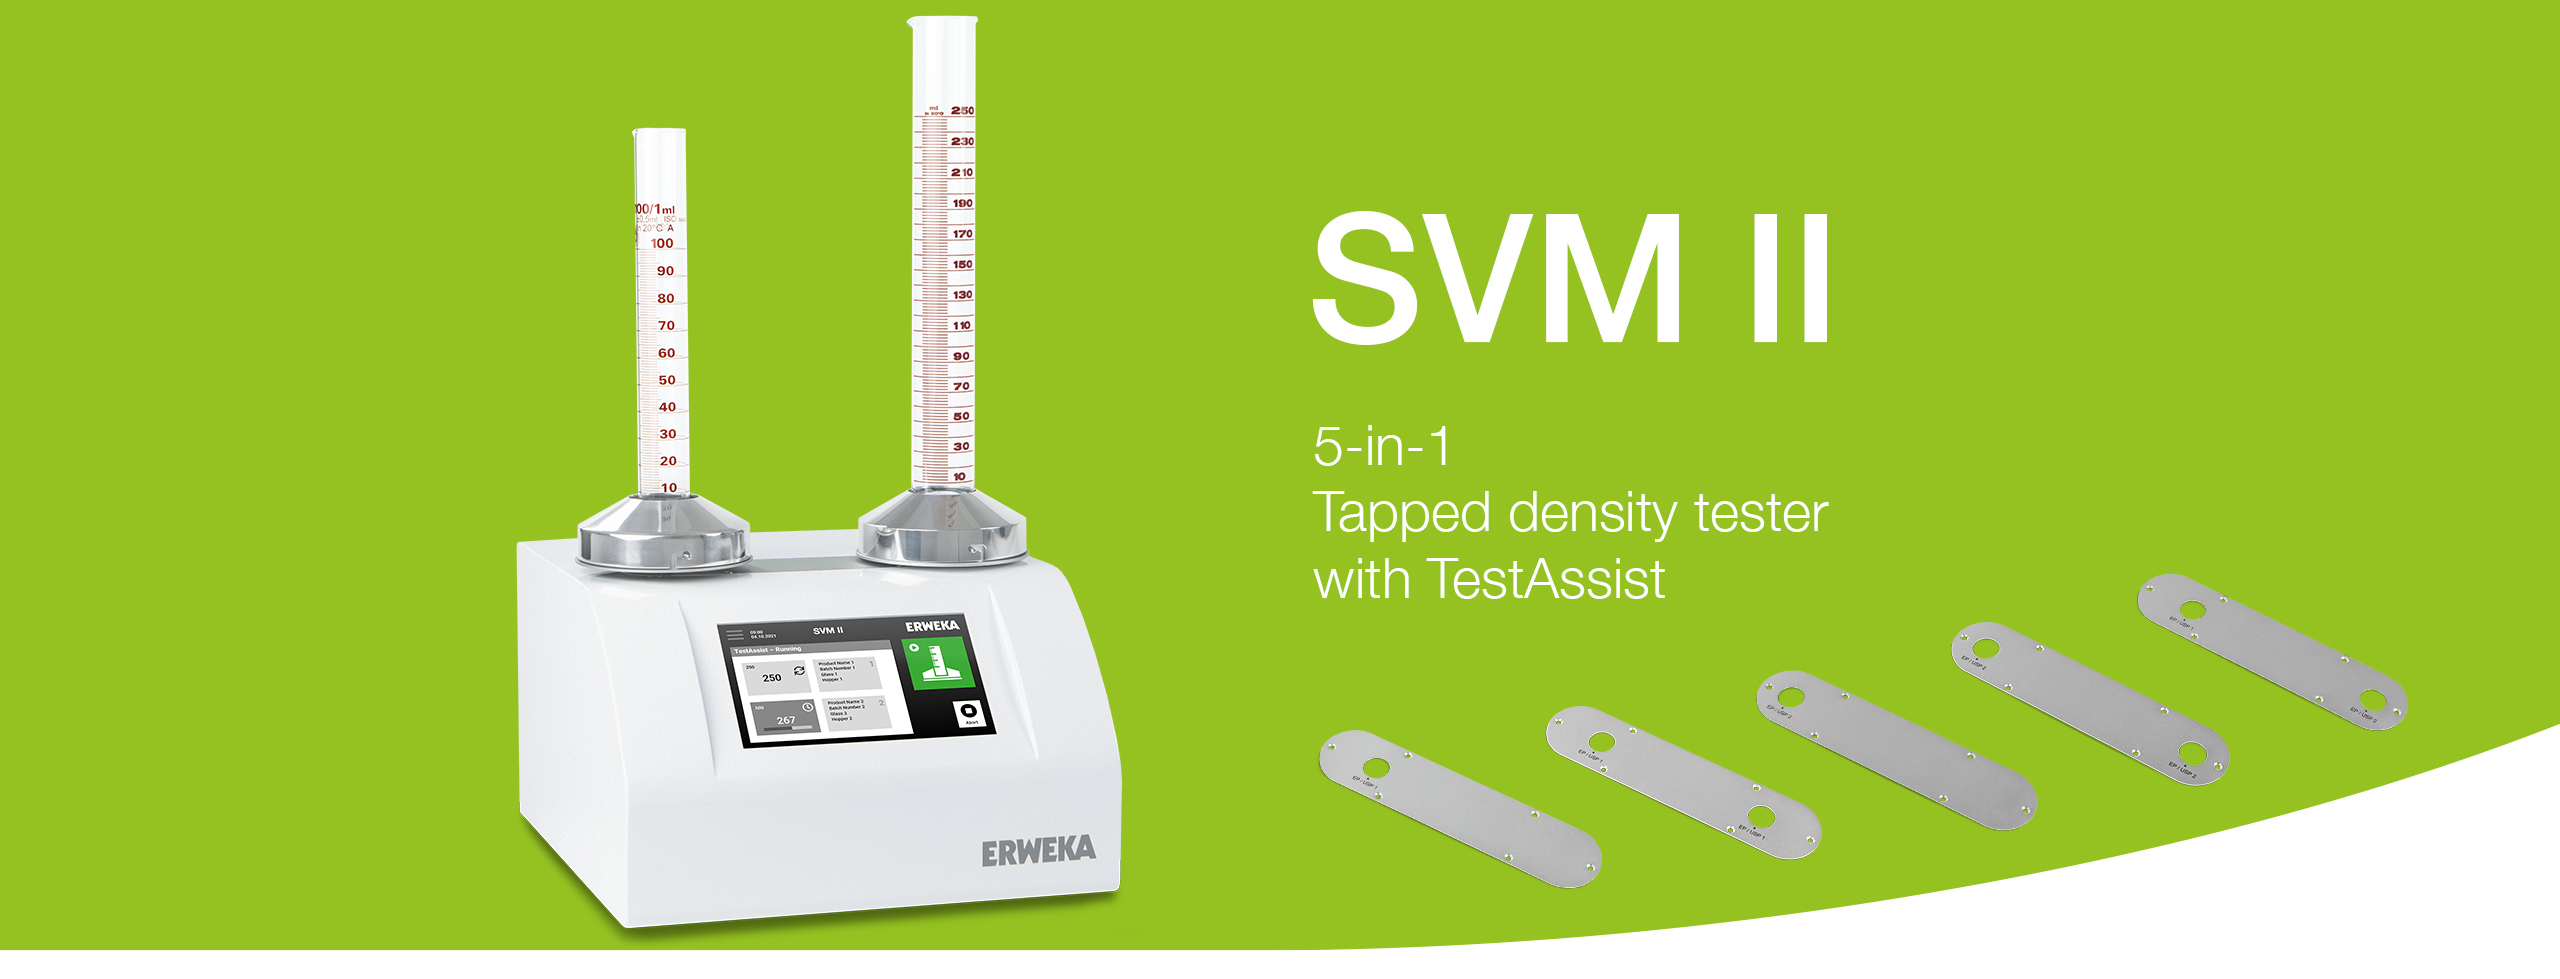 SVM II Tapped density tester